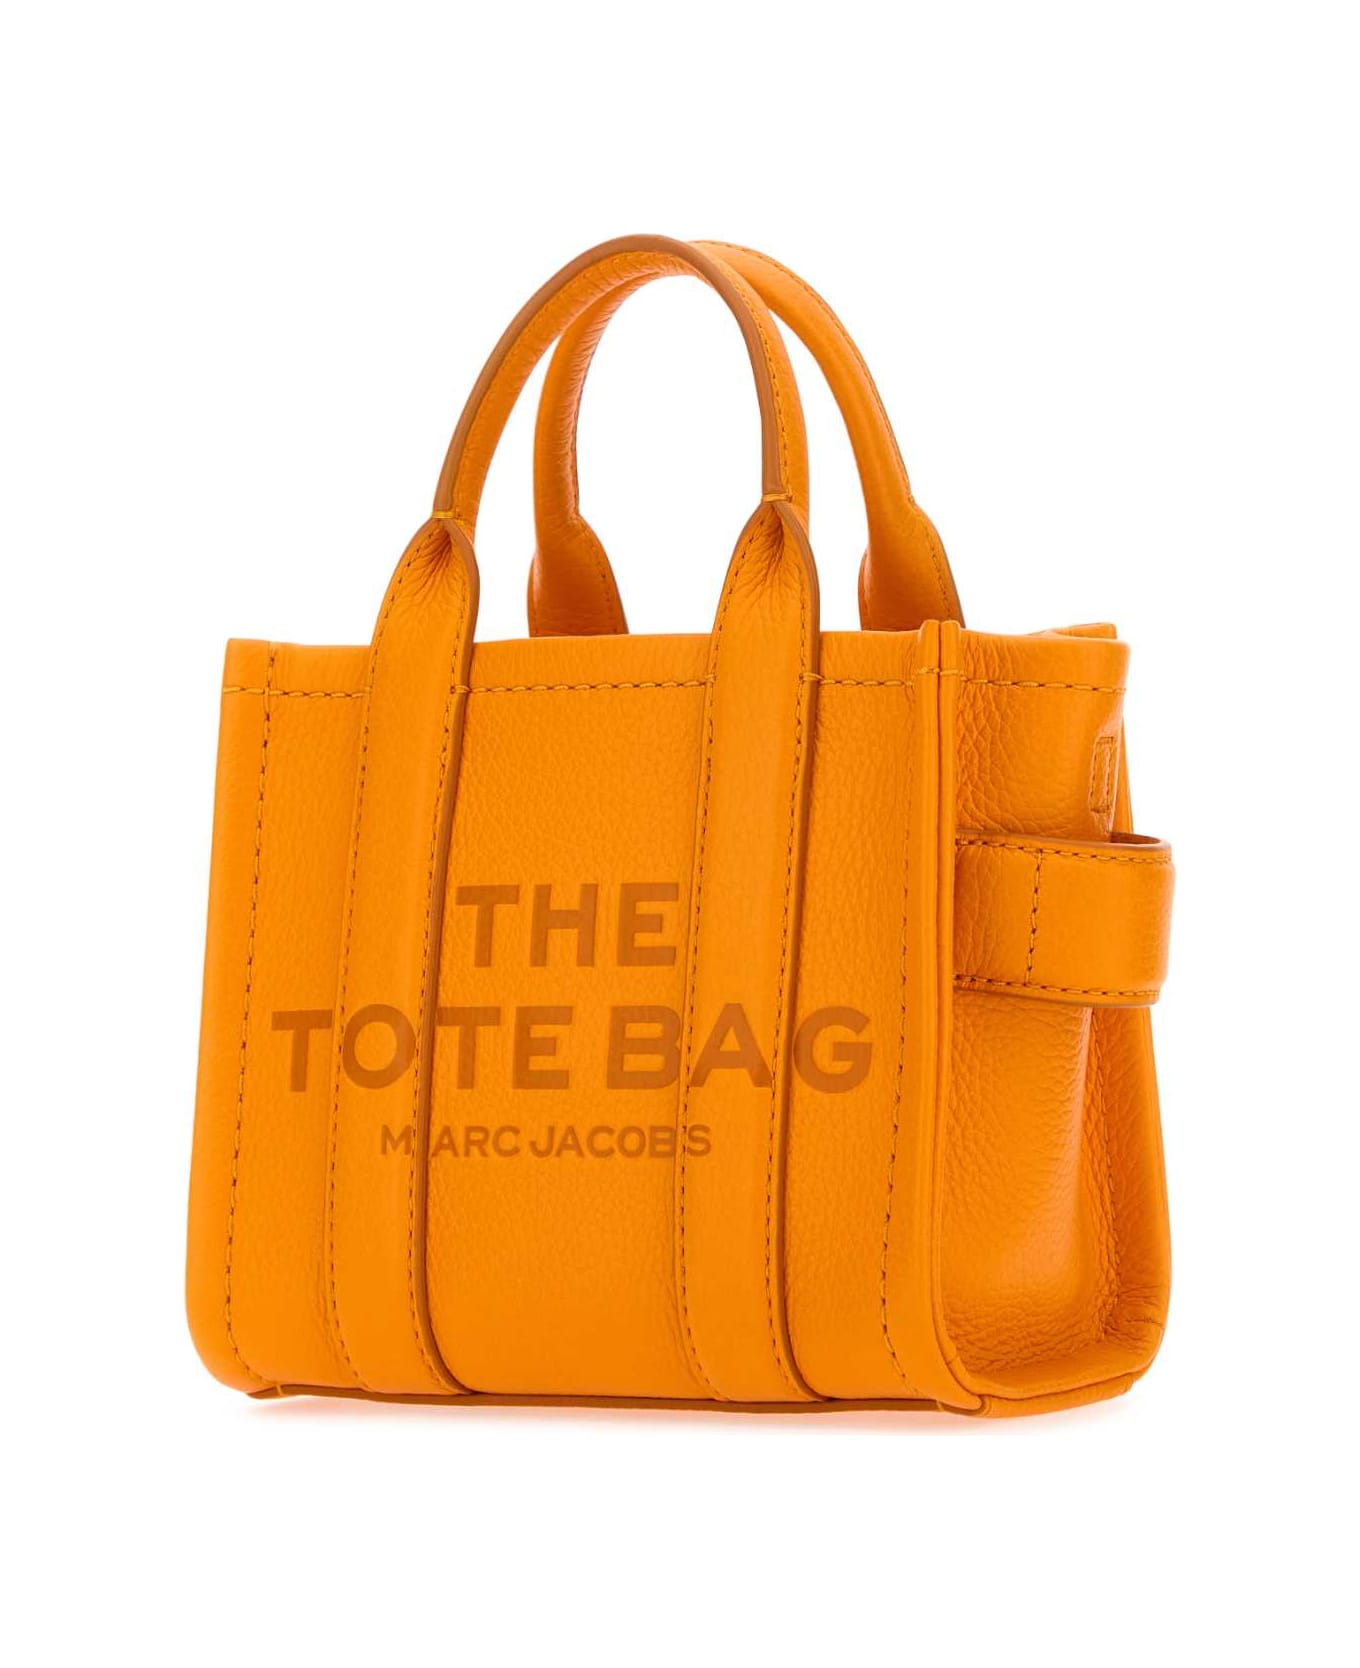 Marc Jacobs Orange Leather Micro The Tote Bag Handbag - TANGERINE